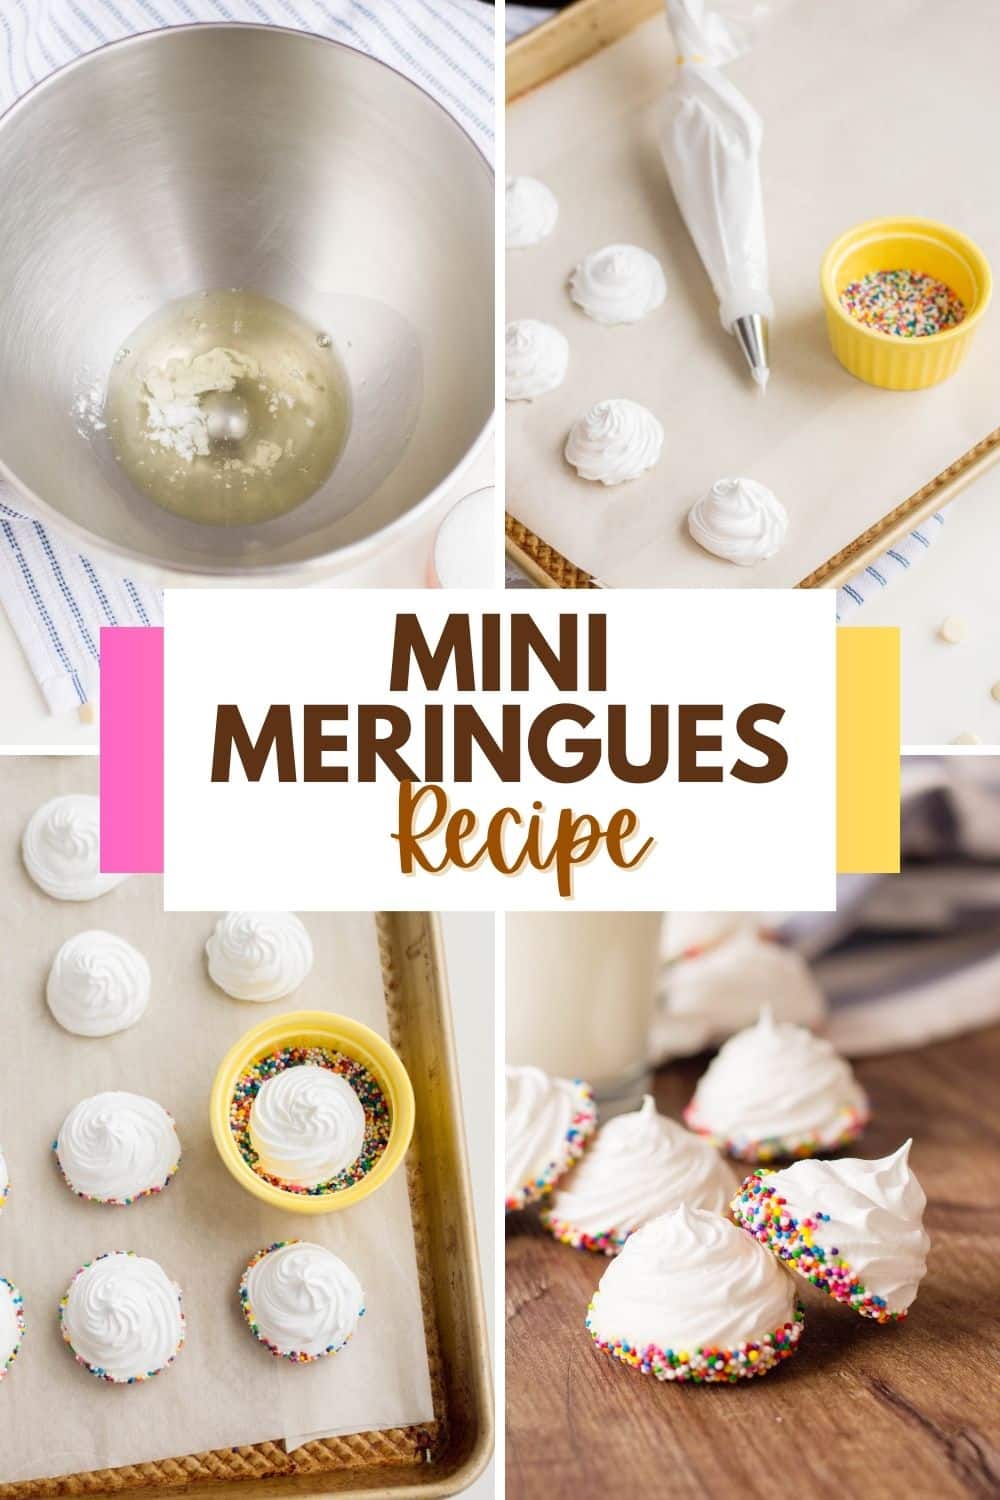 Mini meringues recipe: A delightful and easy-to-follow recipe for making miniature meringues.